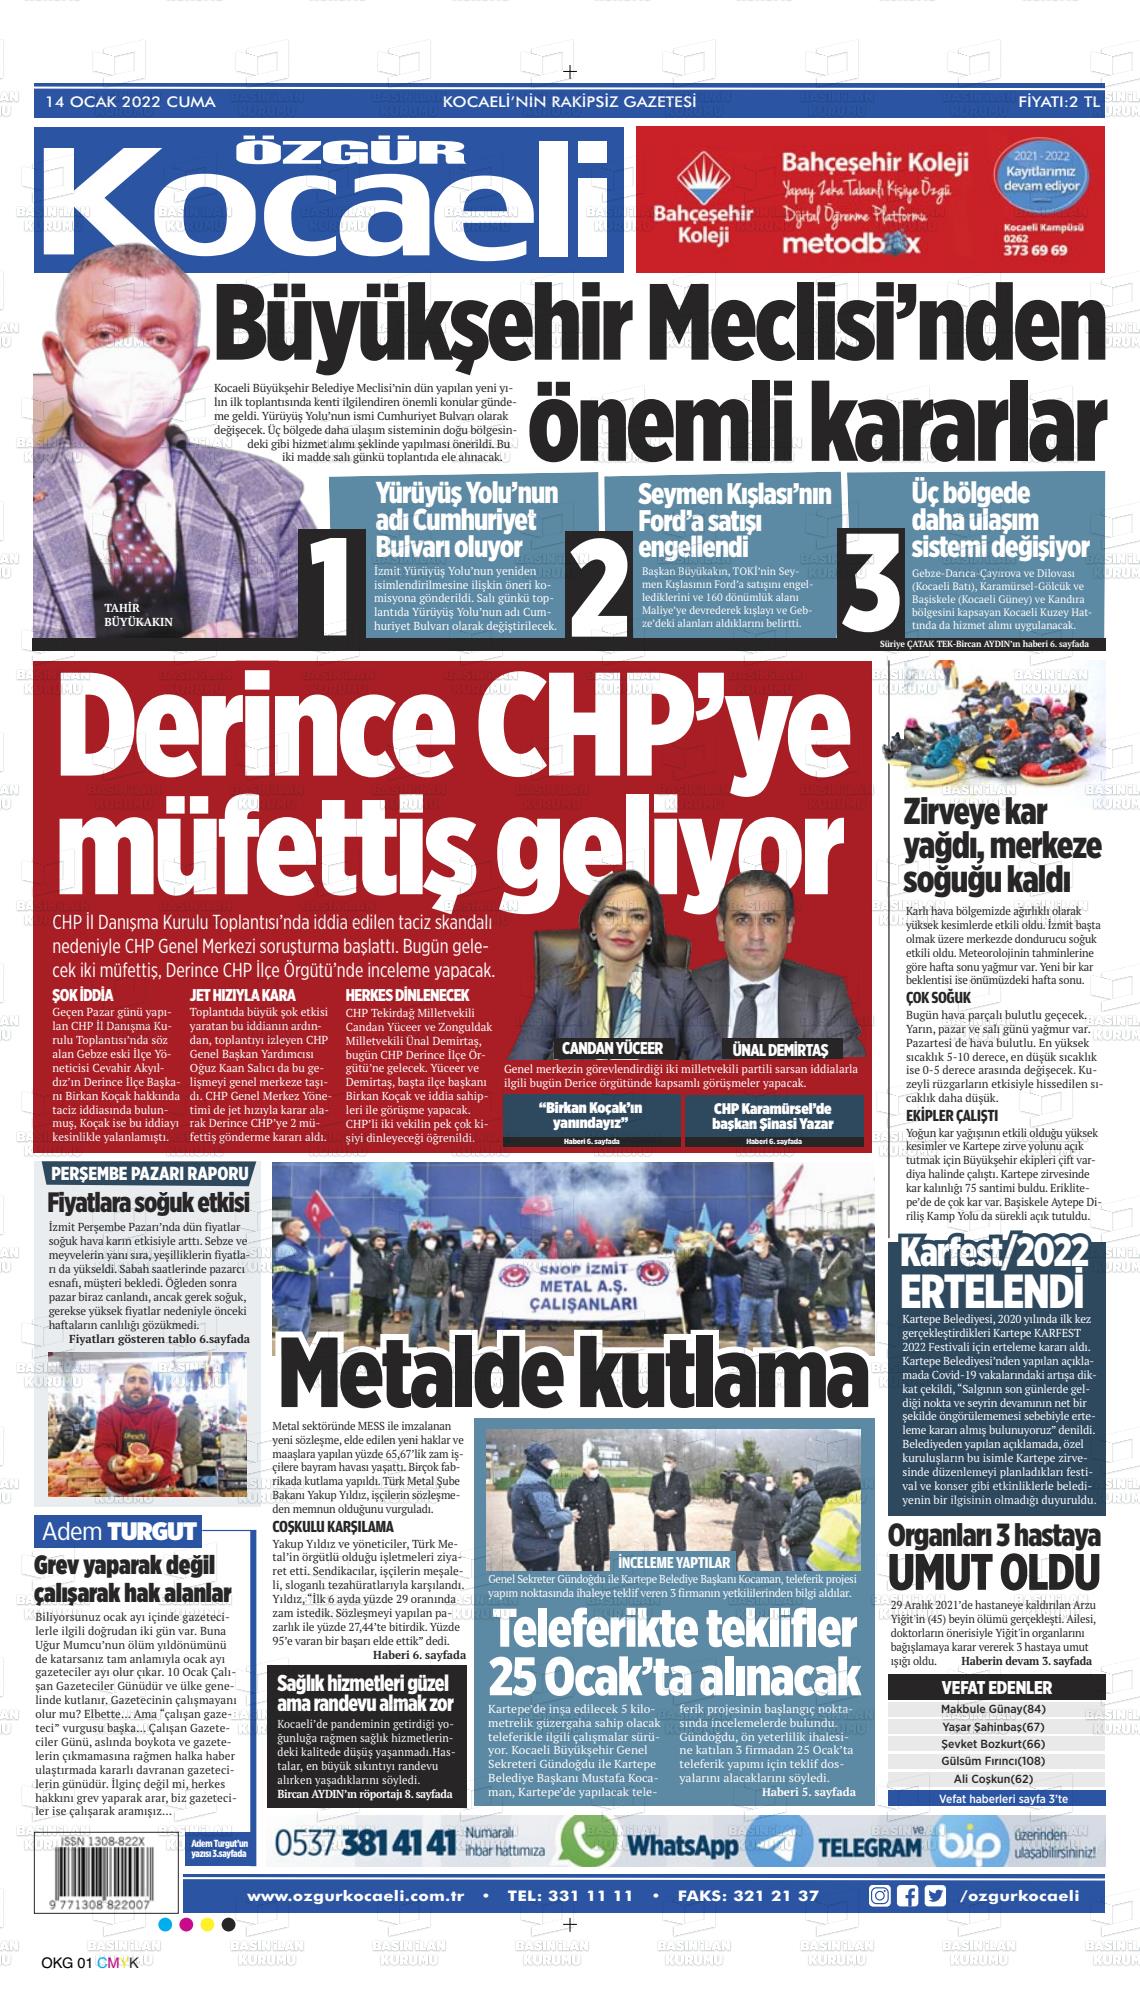 14 Ocak 2022 Özgür Kocaeli Gazete Manşeti